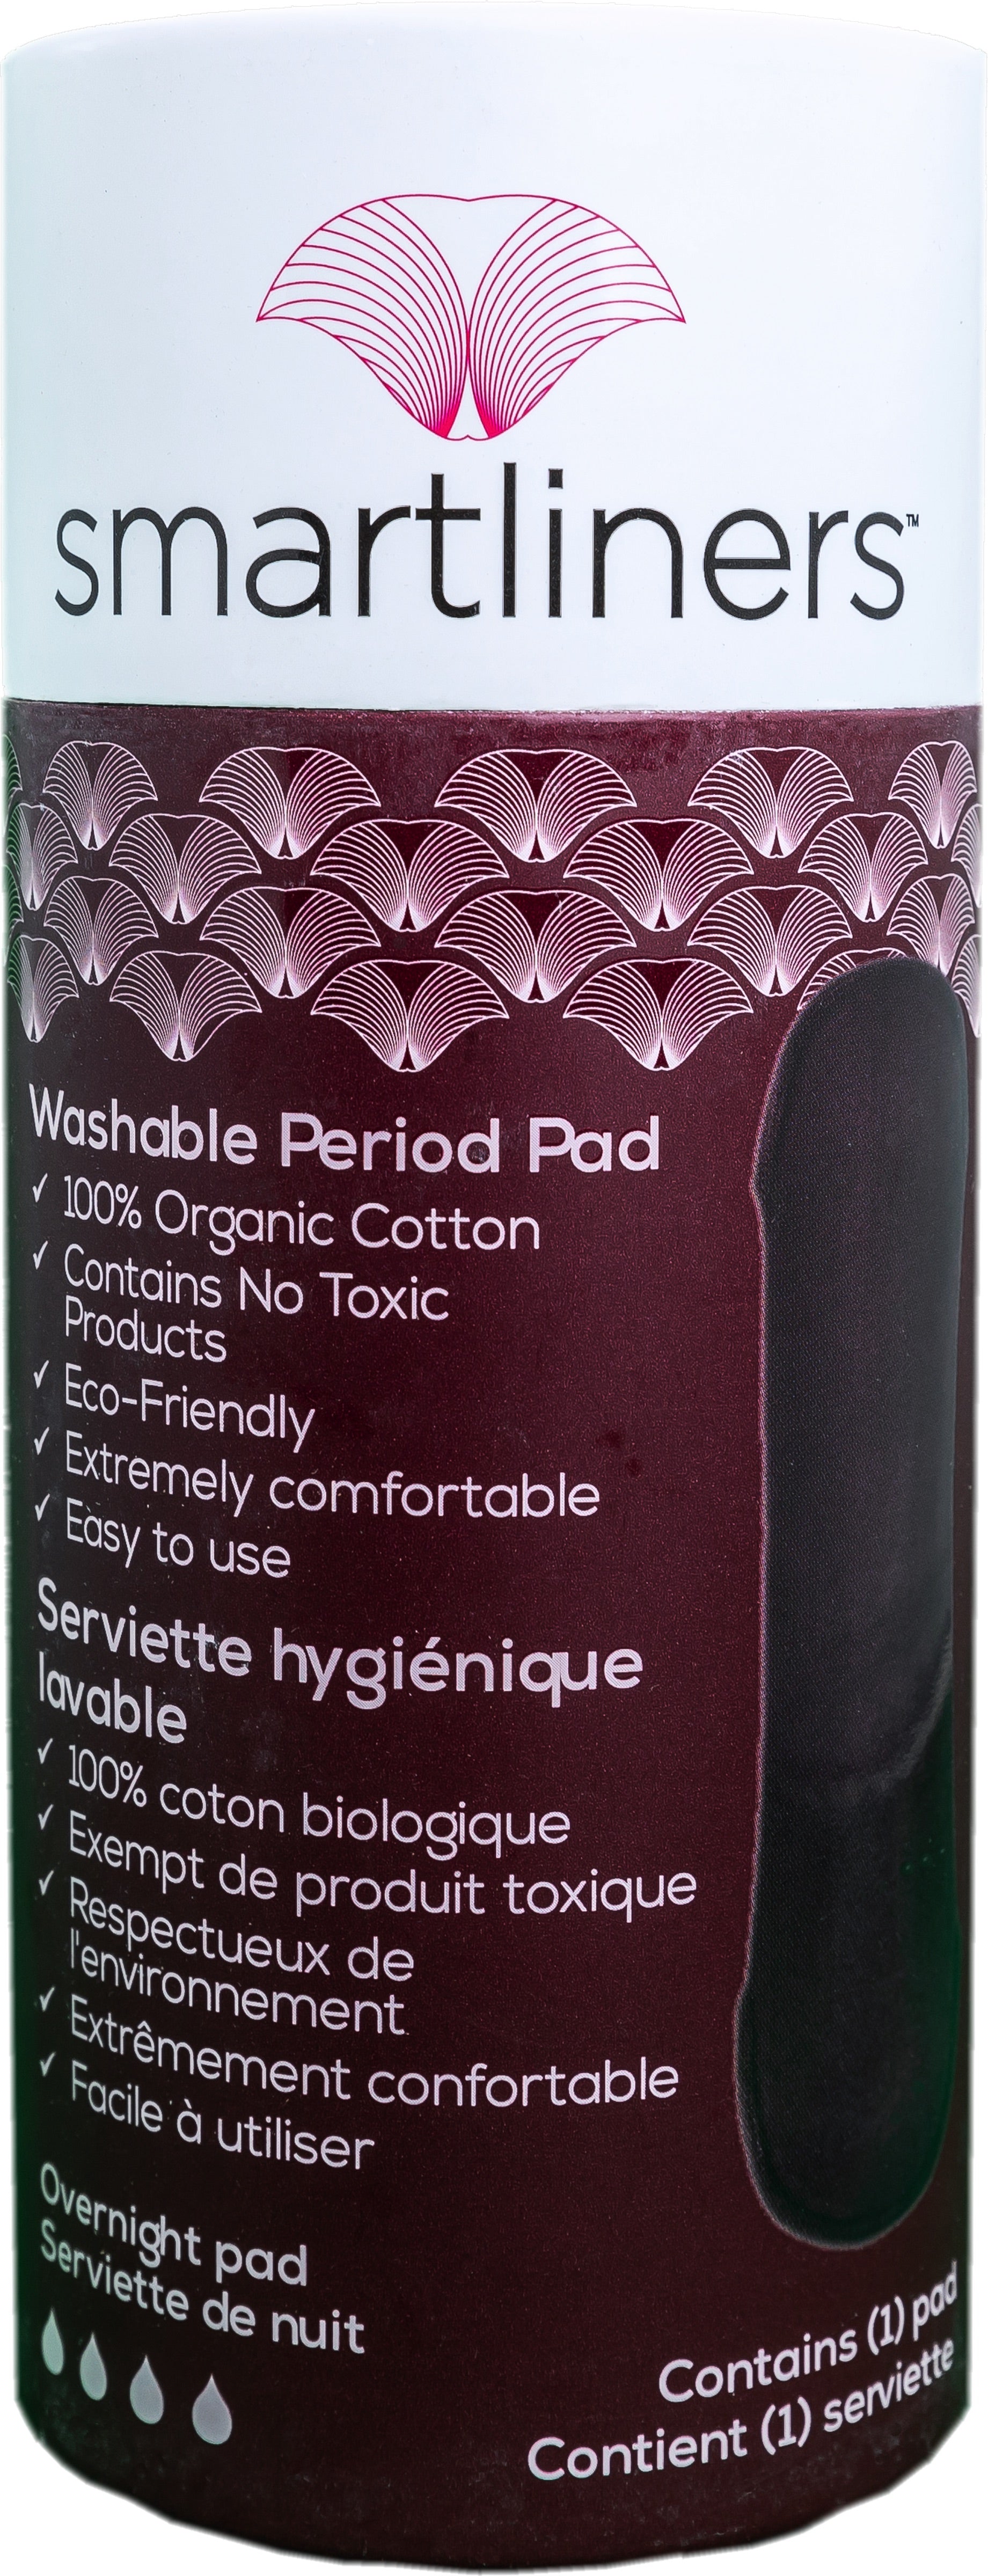 Eco-Friendly & Super Absorbent Reusable Cloth Menstrual Pads